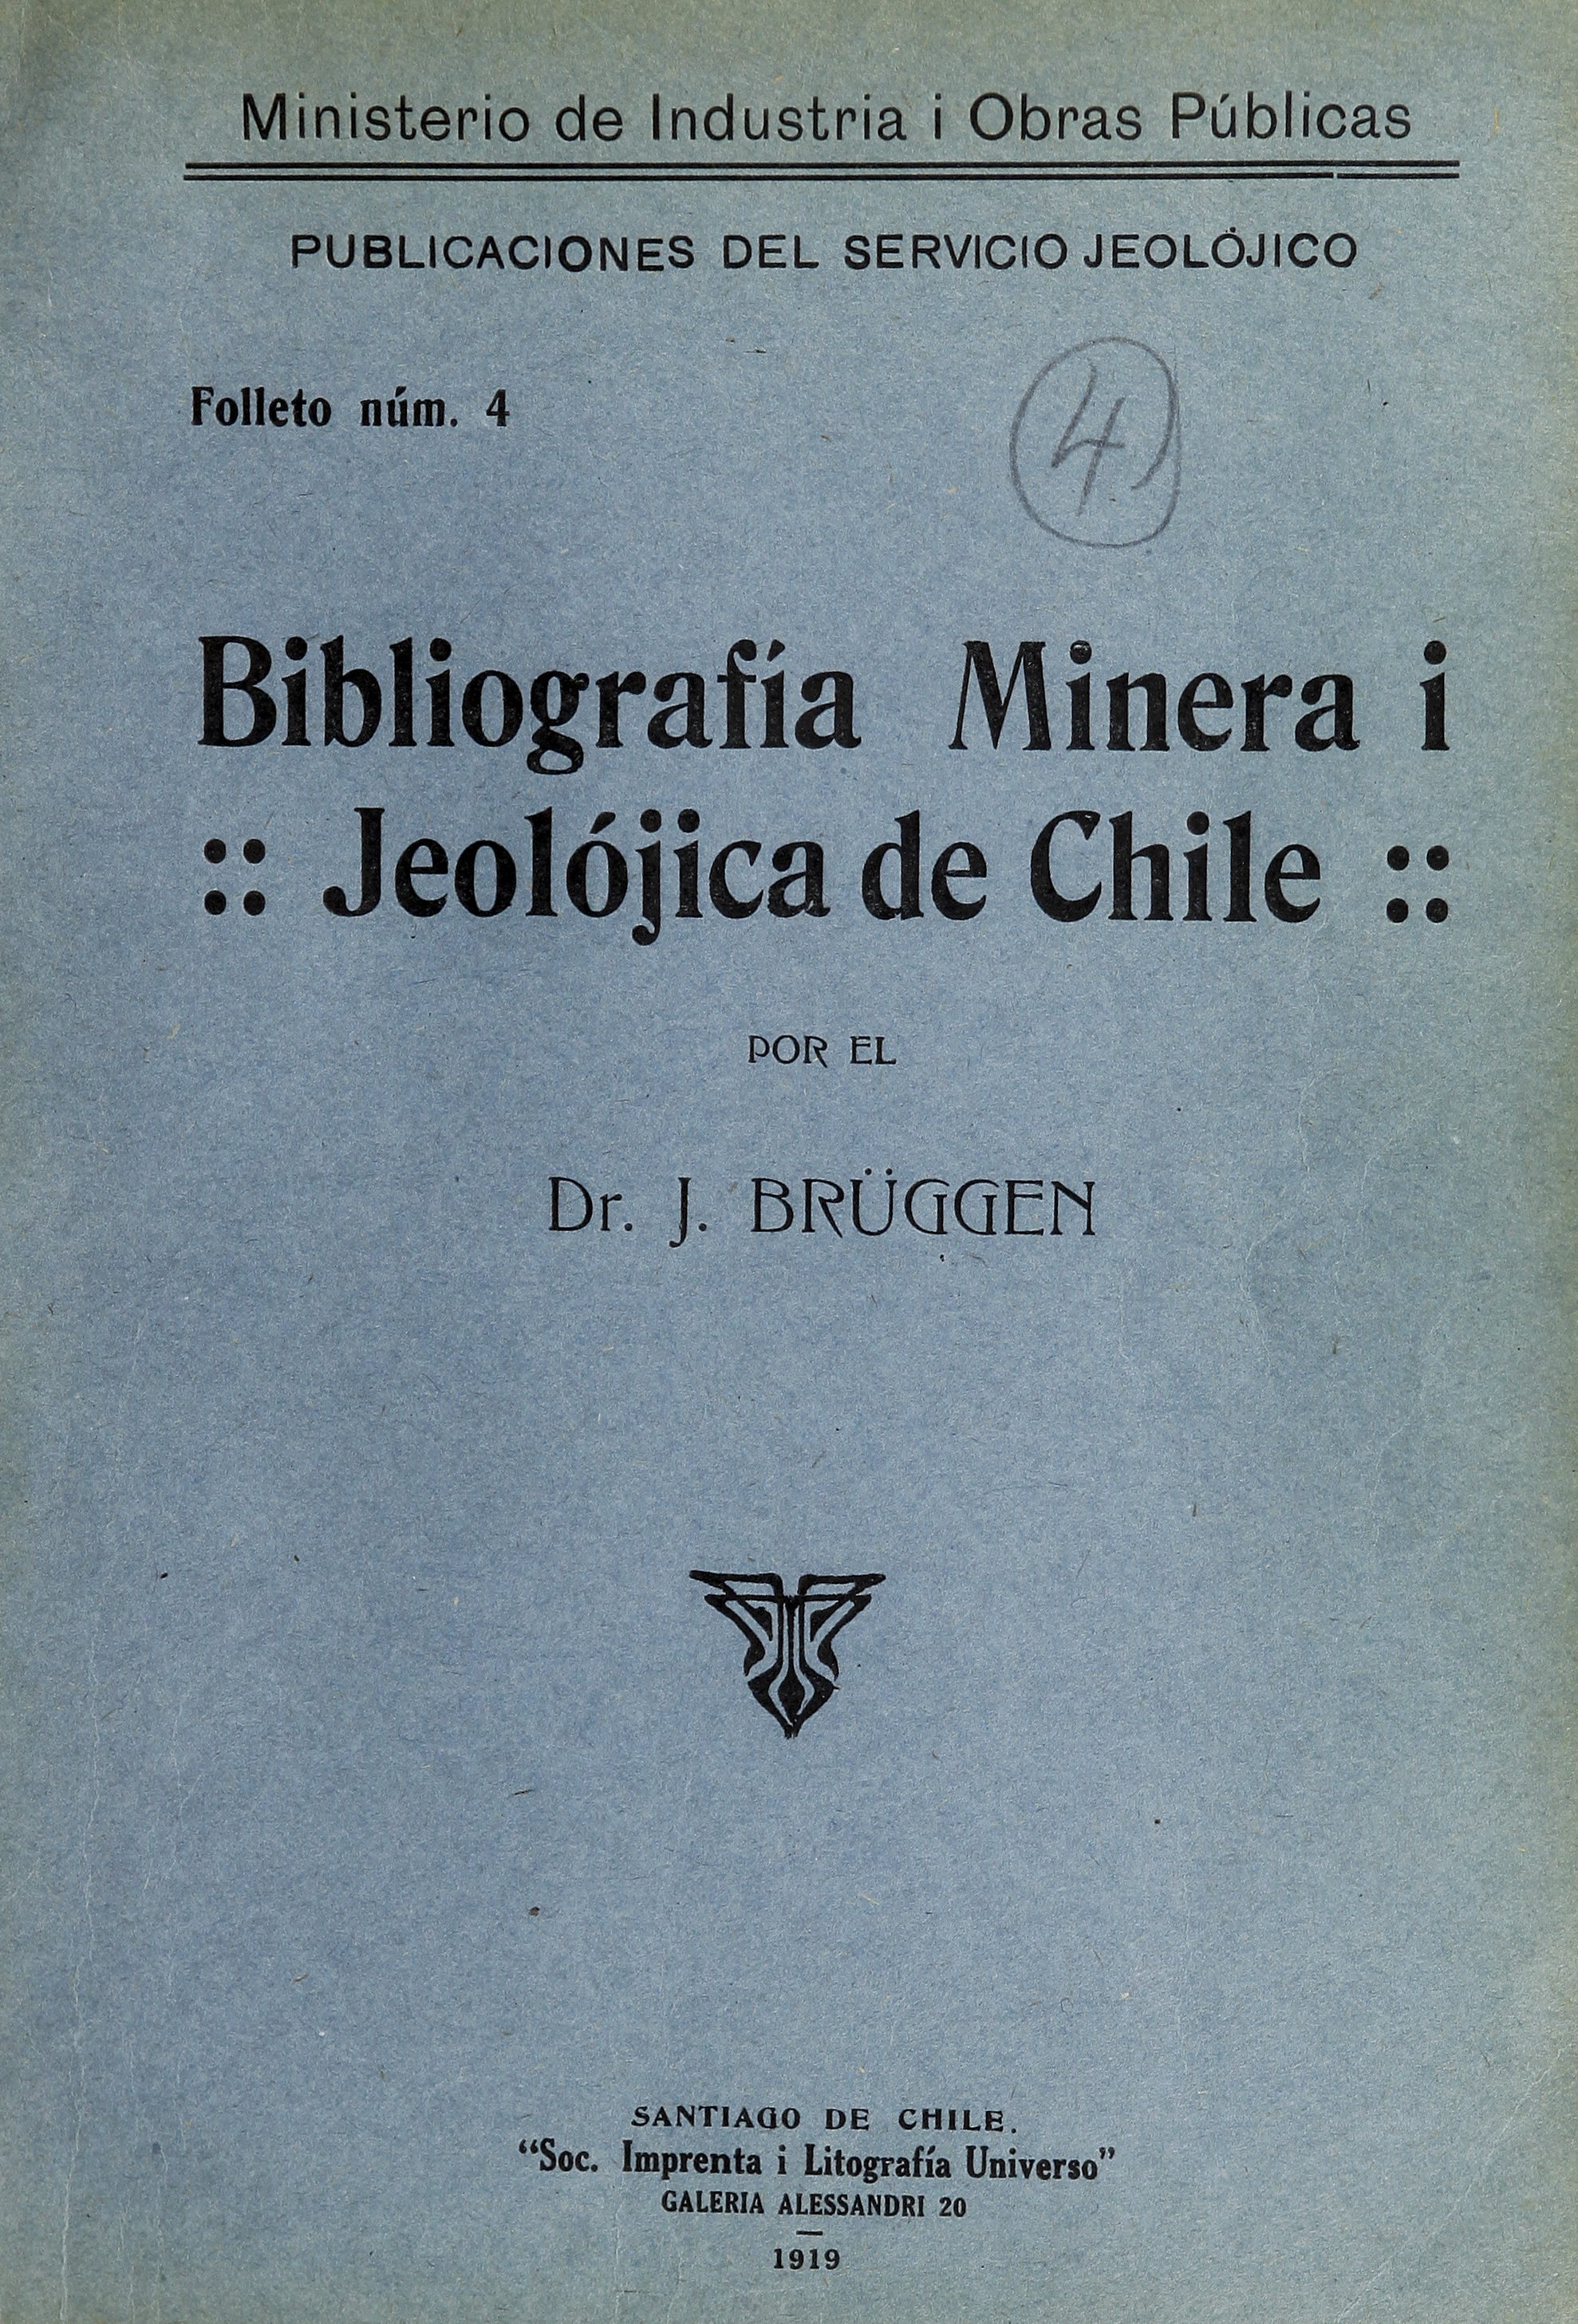 Bibliografía minera i jeolójica de Chile.